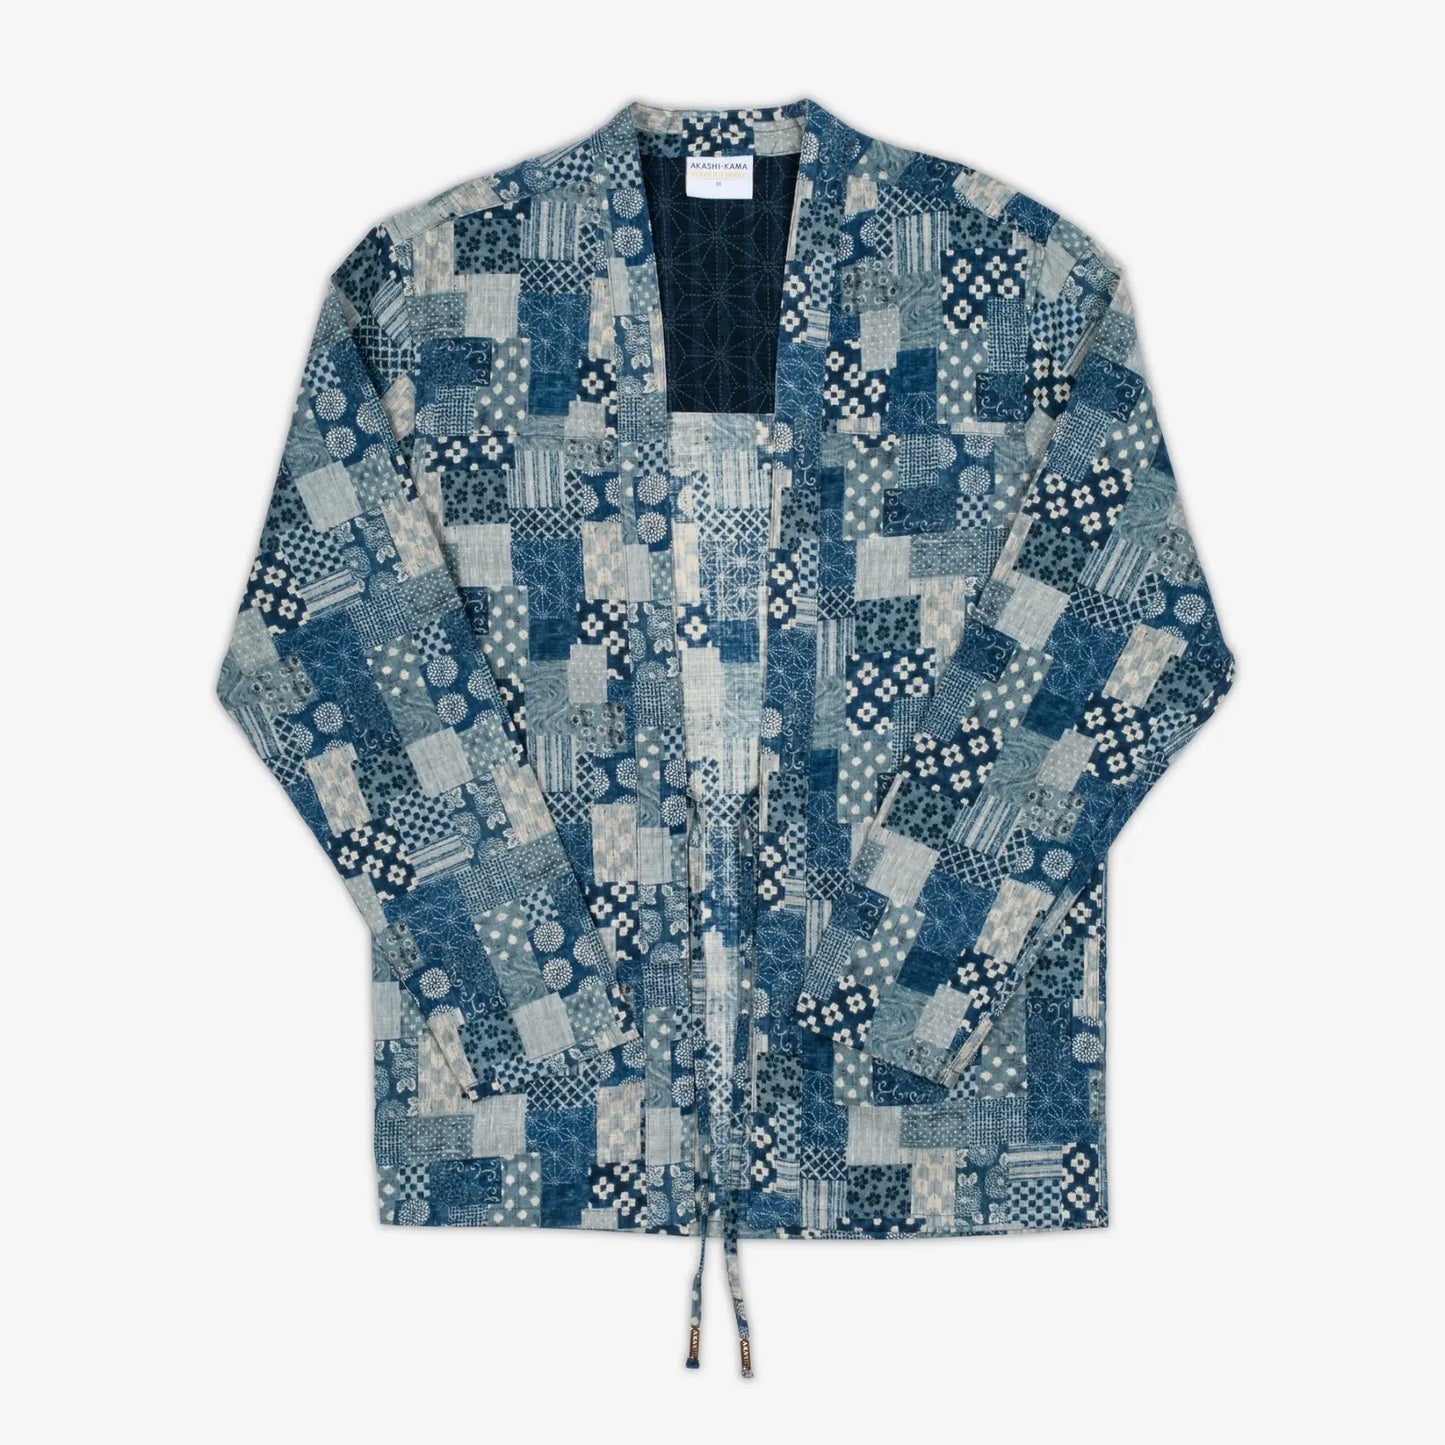 AKASHI-KAMA Boro Print Noragi Jacket | Japanese Streetwear Kimono Shirt